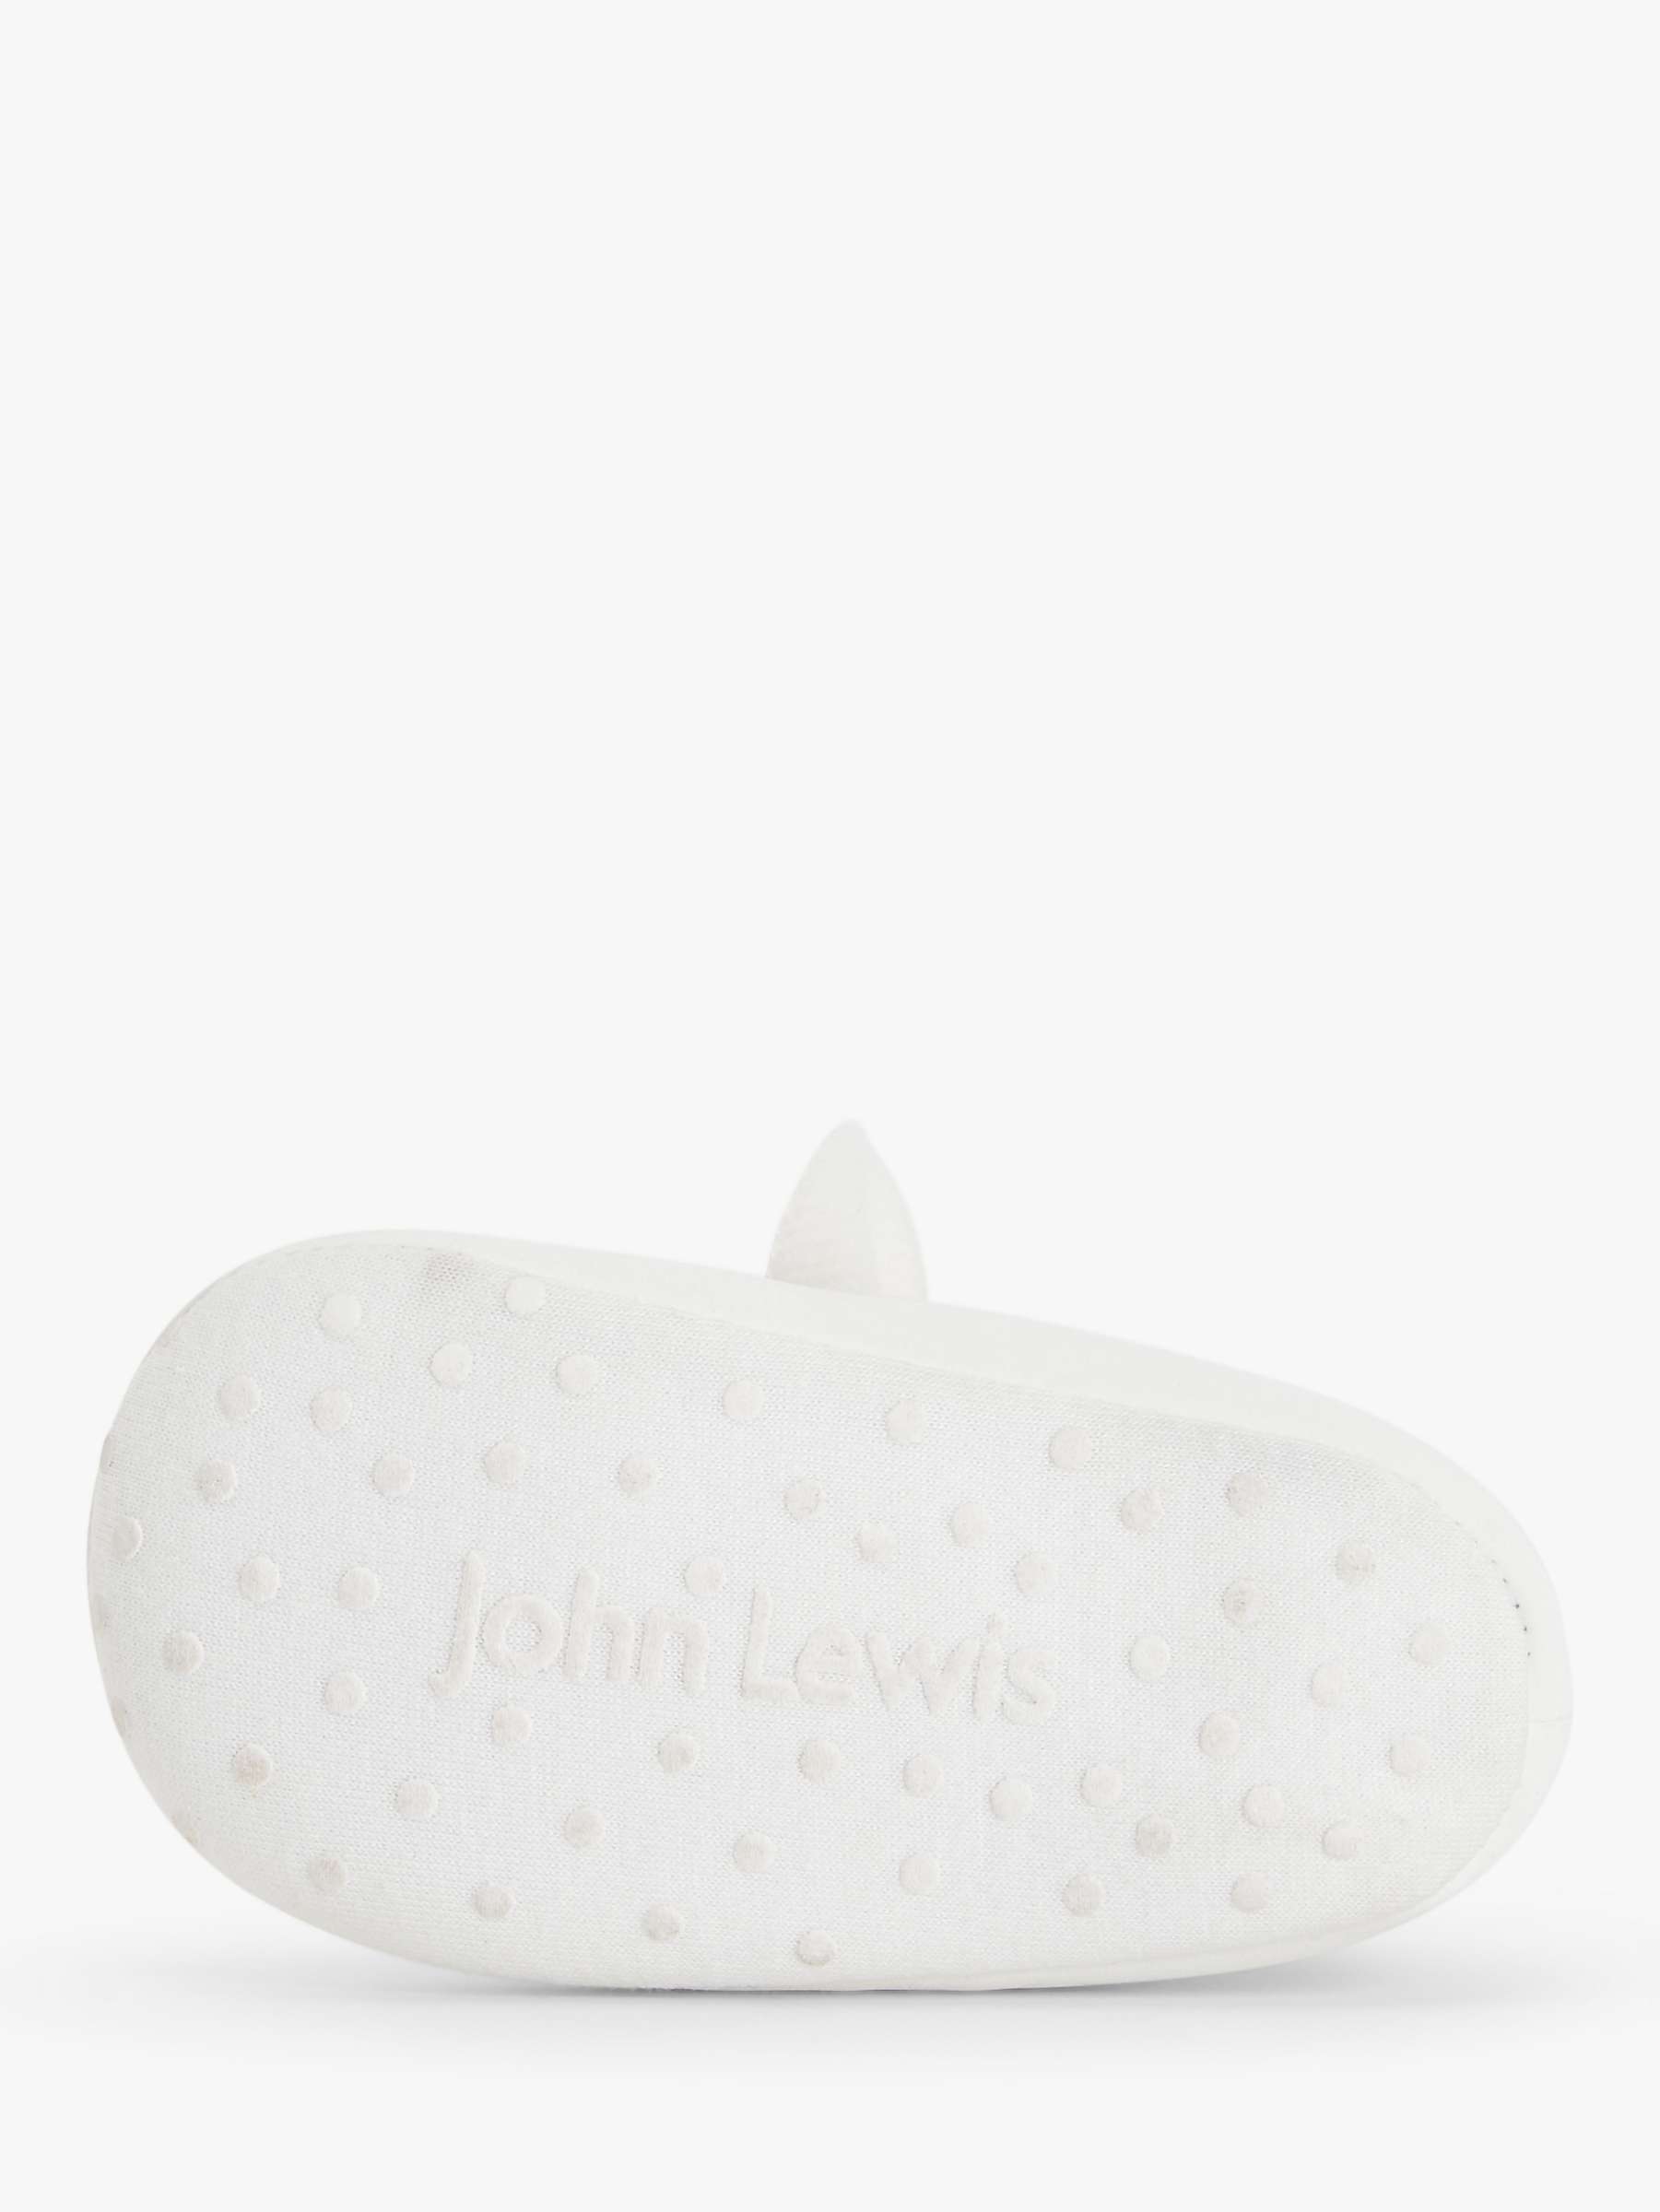 Buy John Lewis Baby Bow Bar Shoes, White Online at johnlewis.com